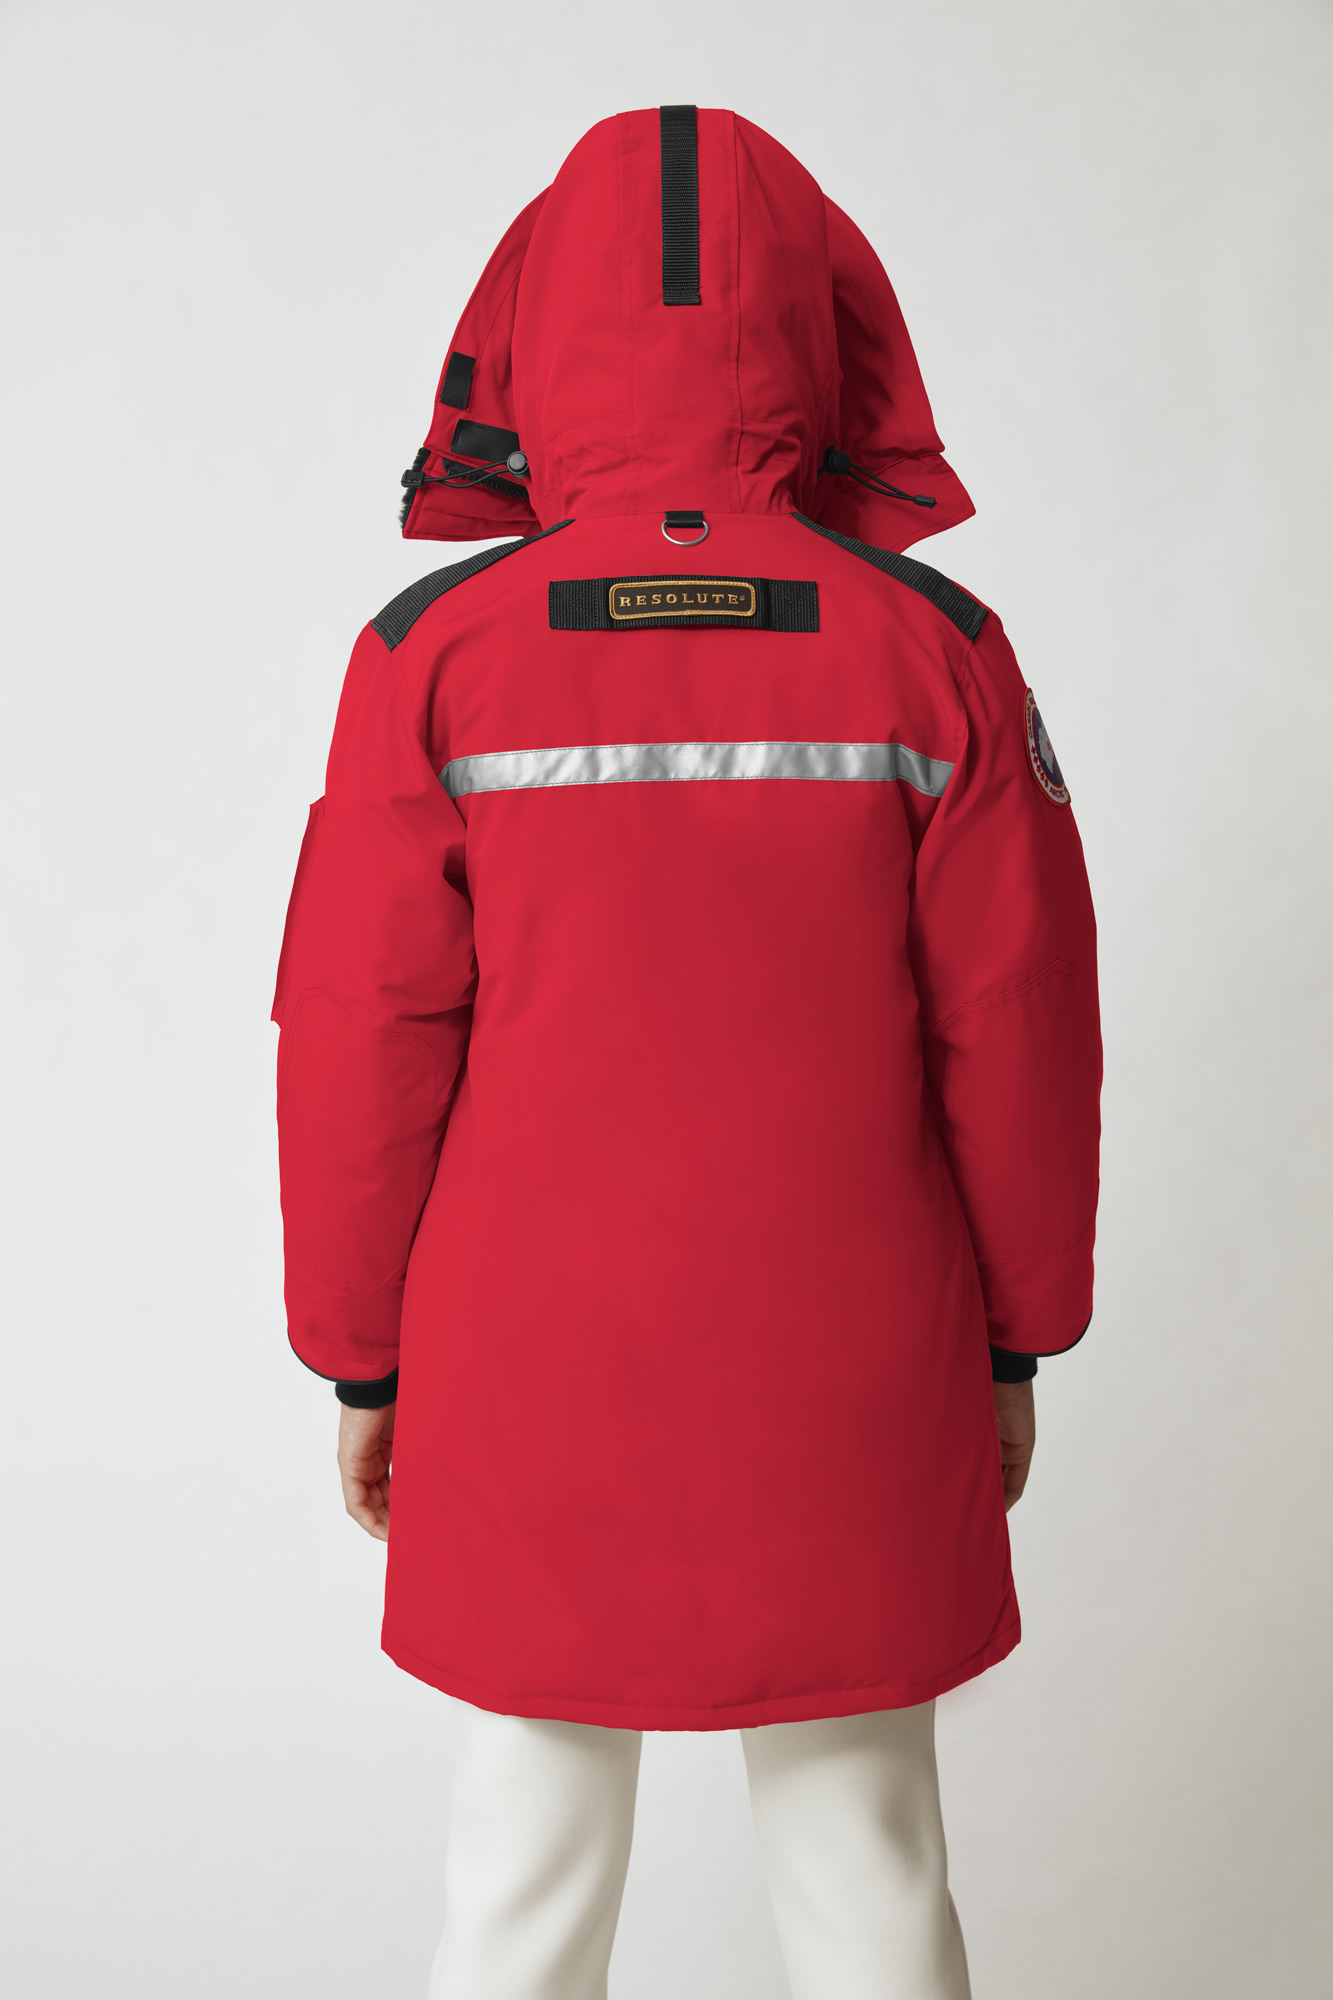 north pole women's jackets